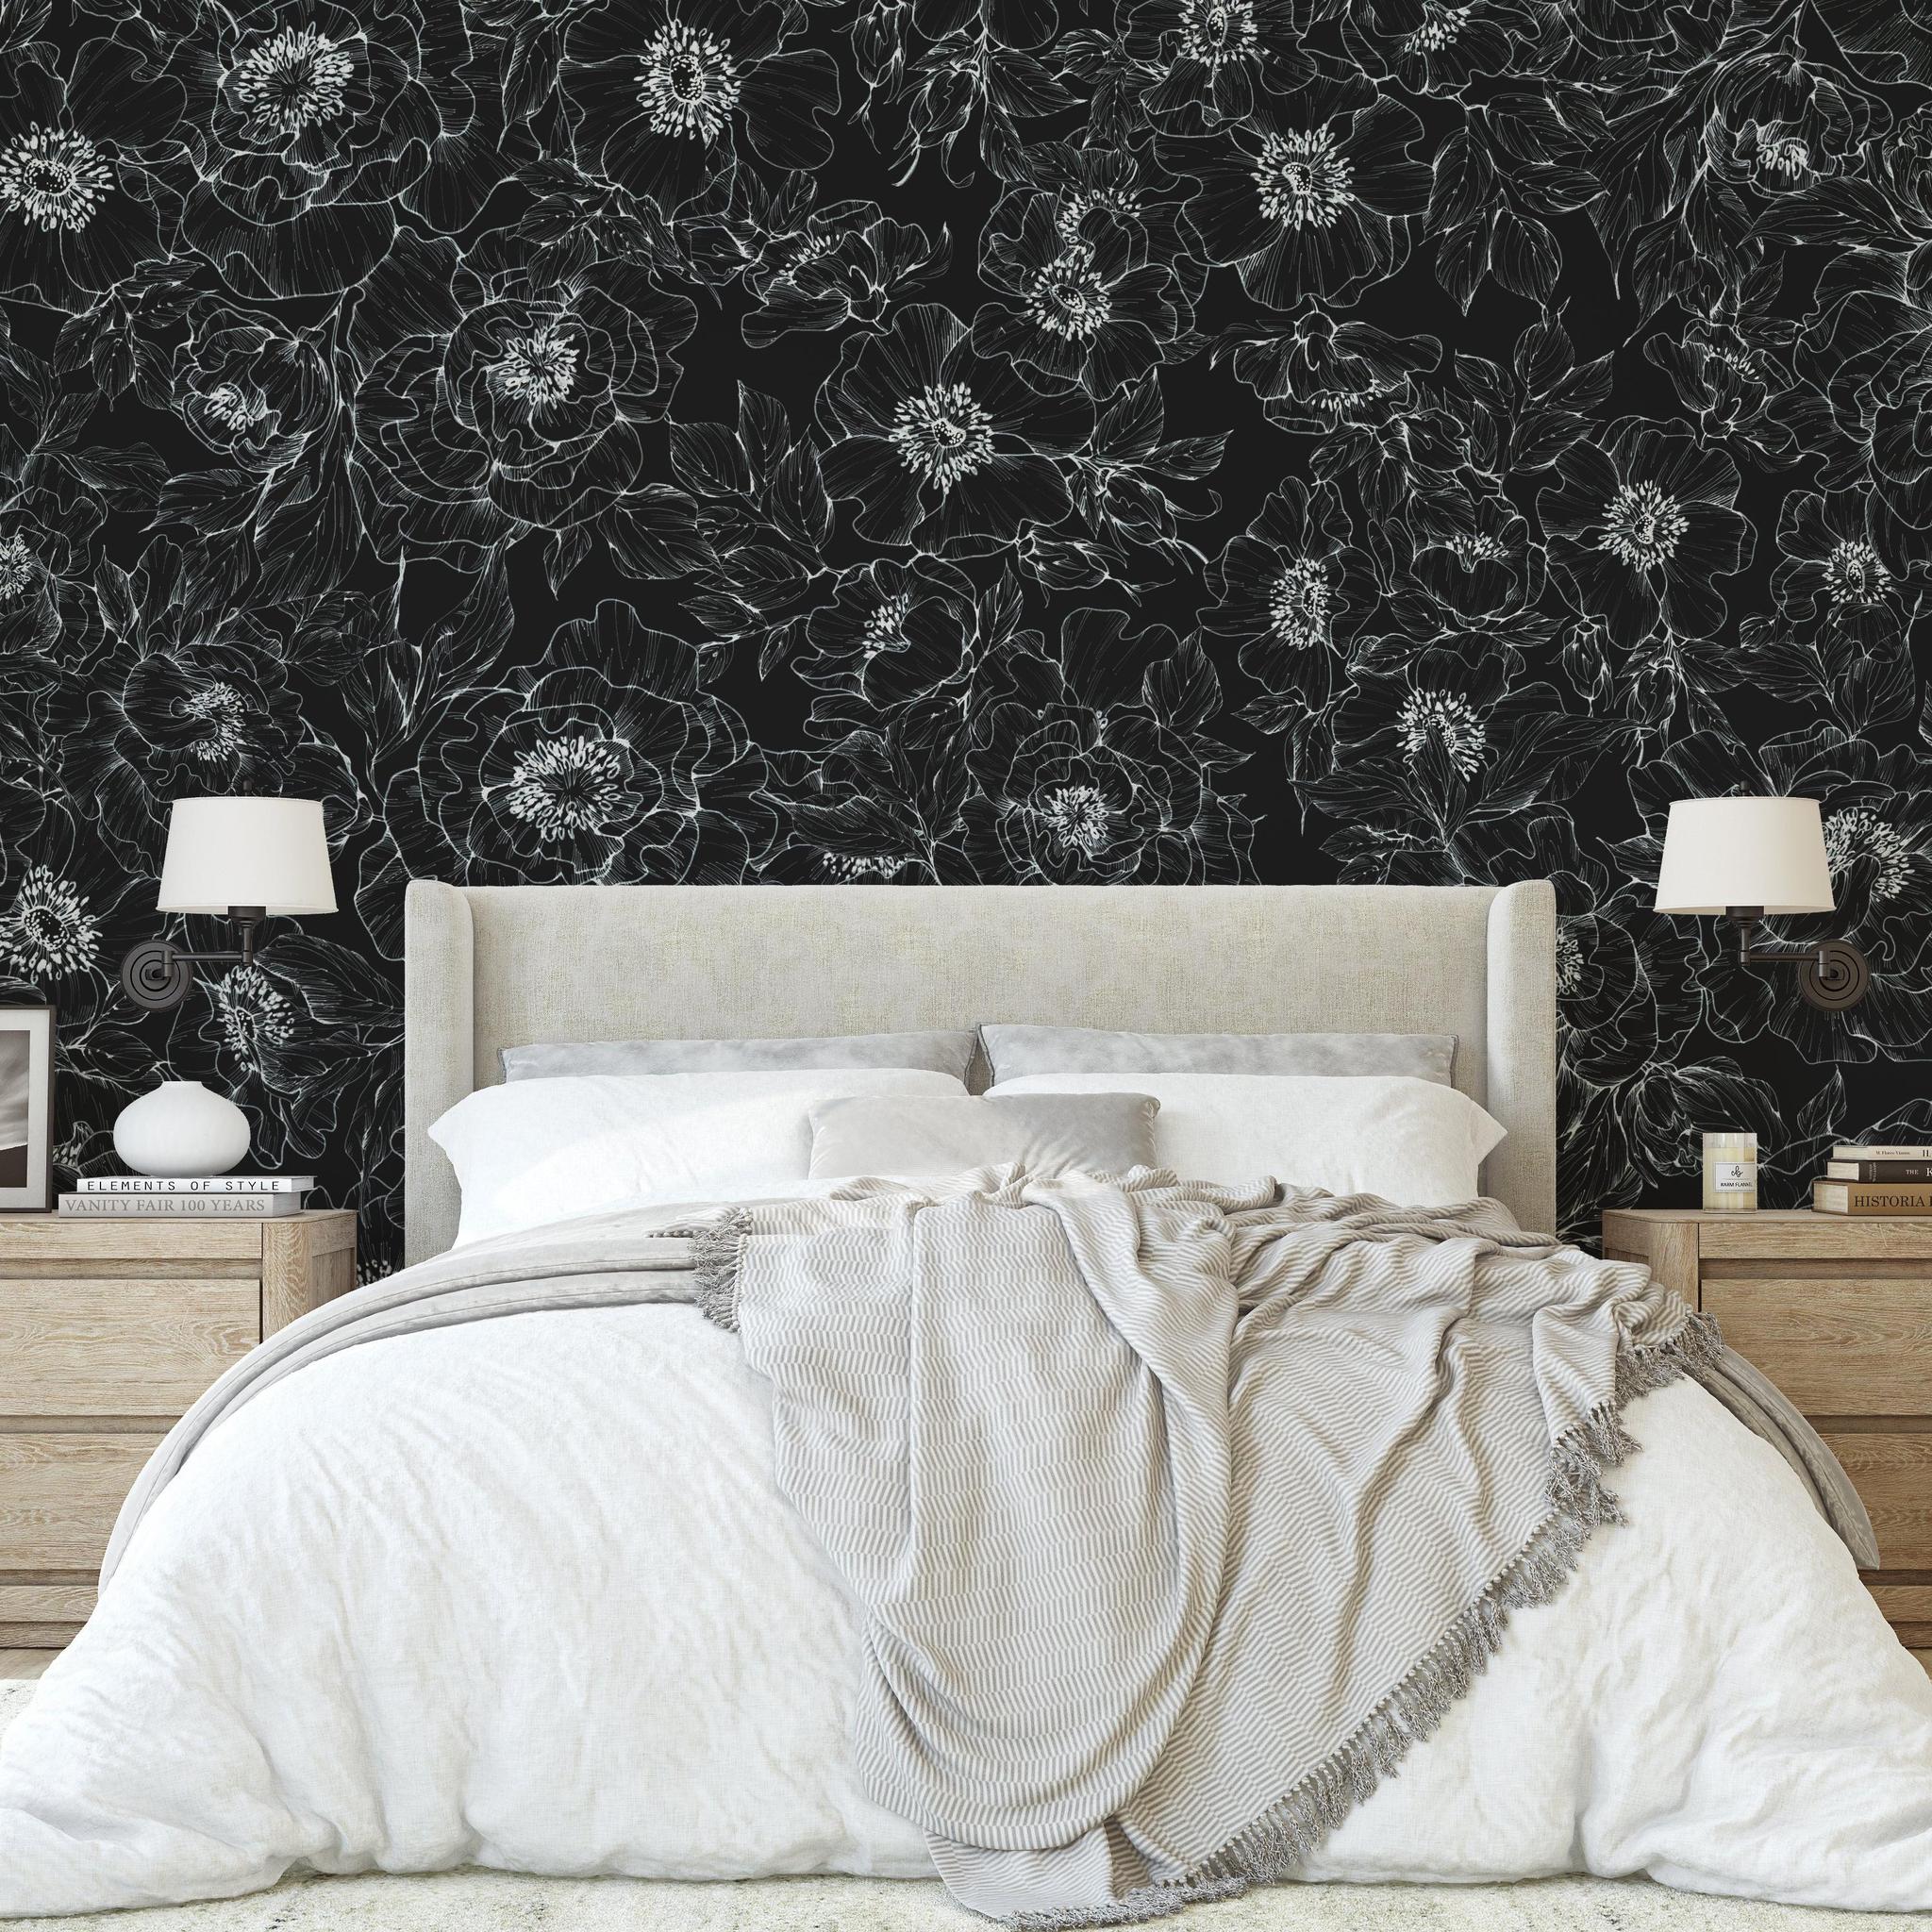 Dutchess Black wallpaper from Ania Zwara Line enhancing a bedroom's elegance with floral design.
